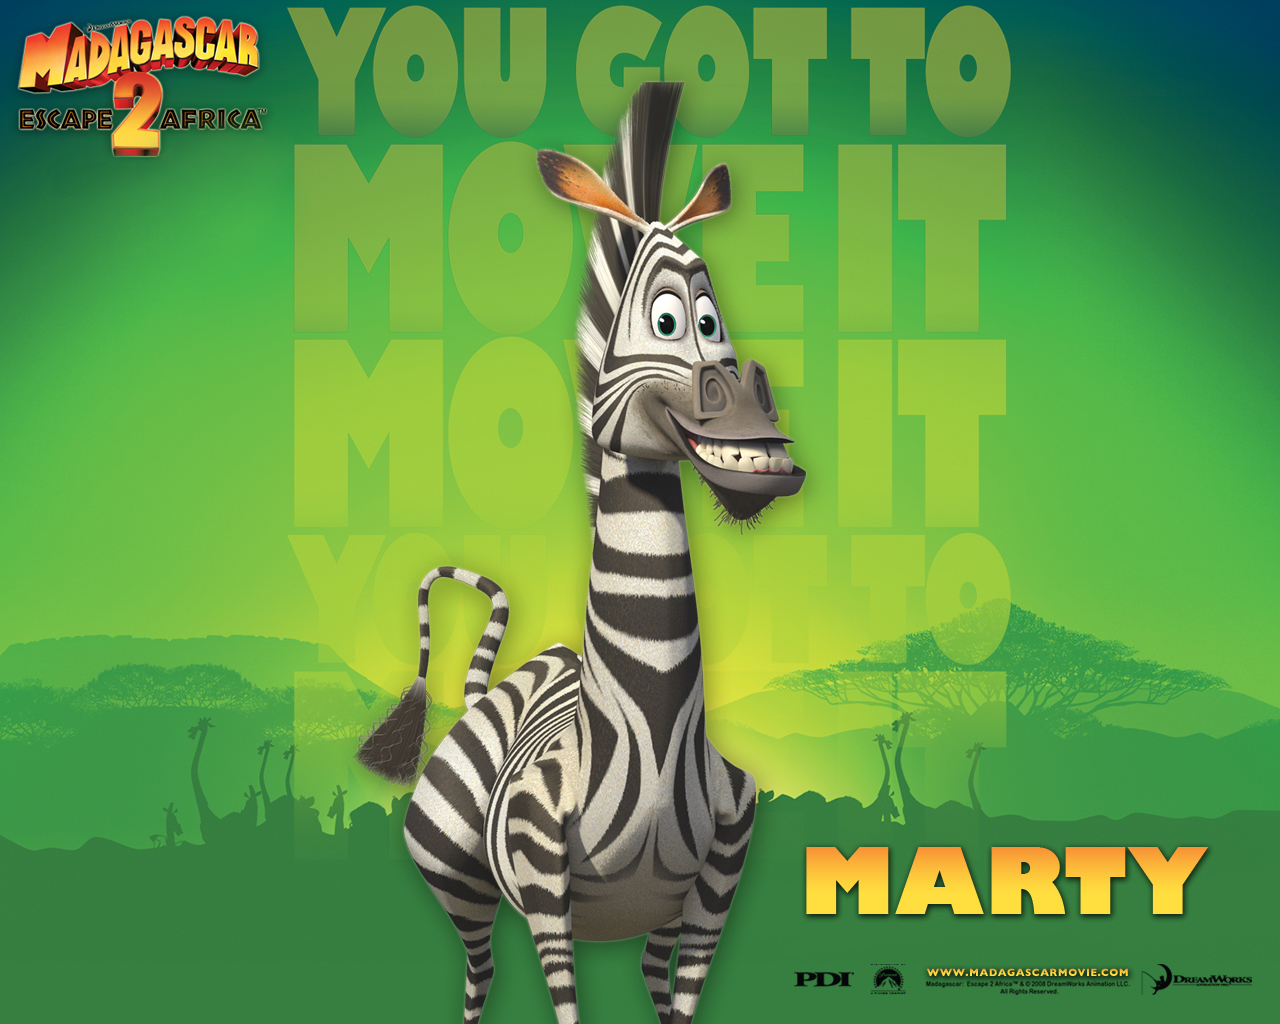 Madagascar's Marty the Zebra Desktop Wallpaper